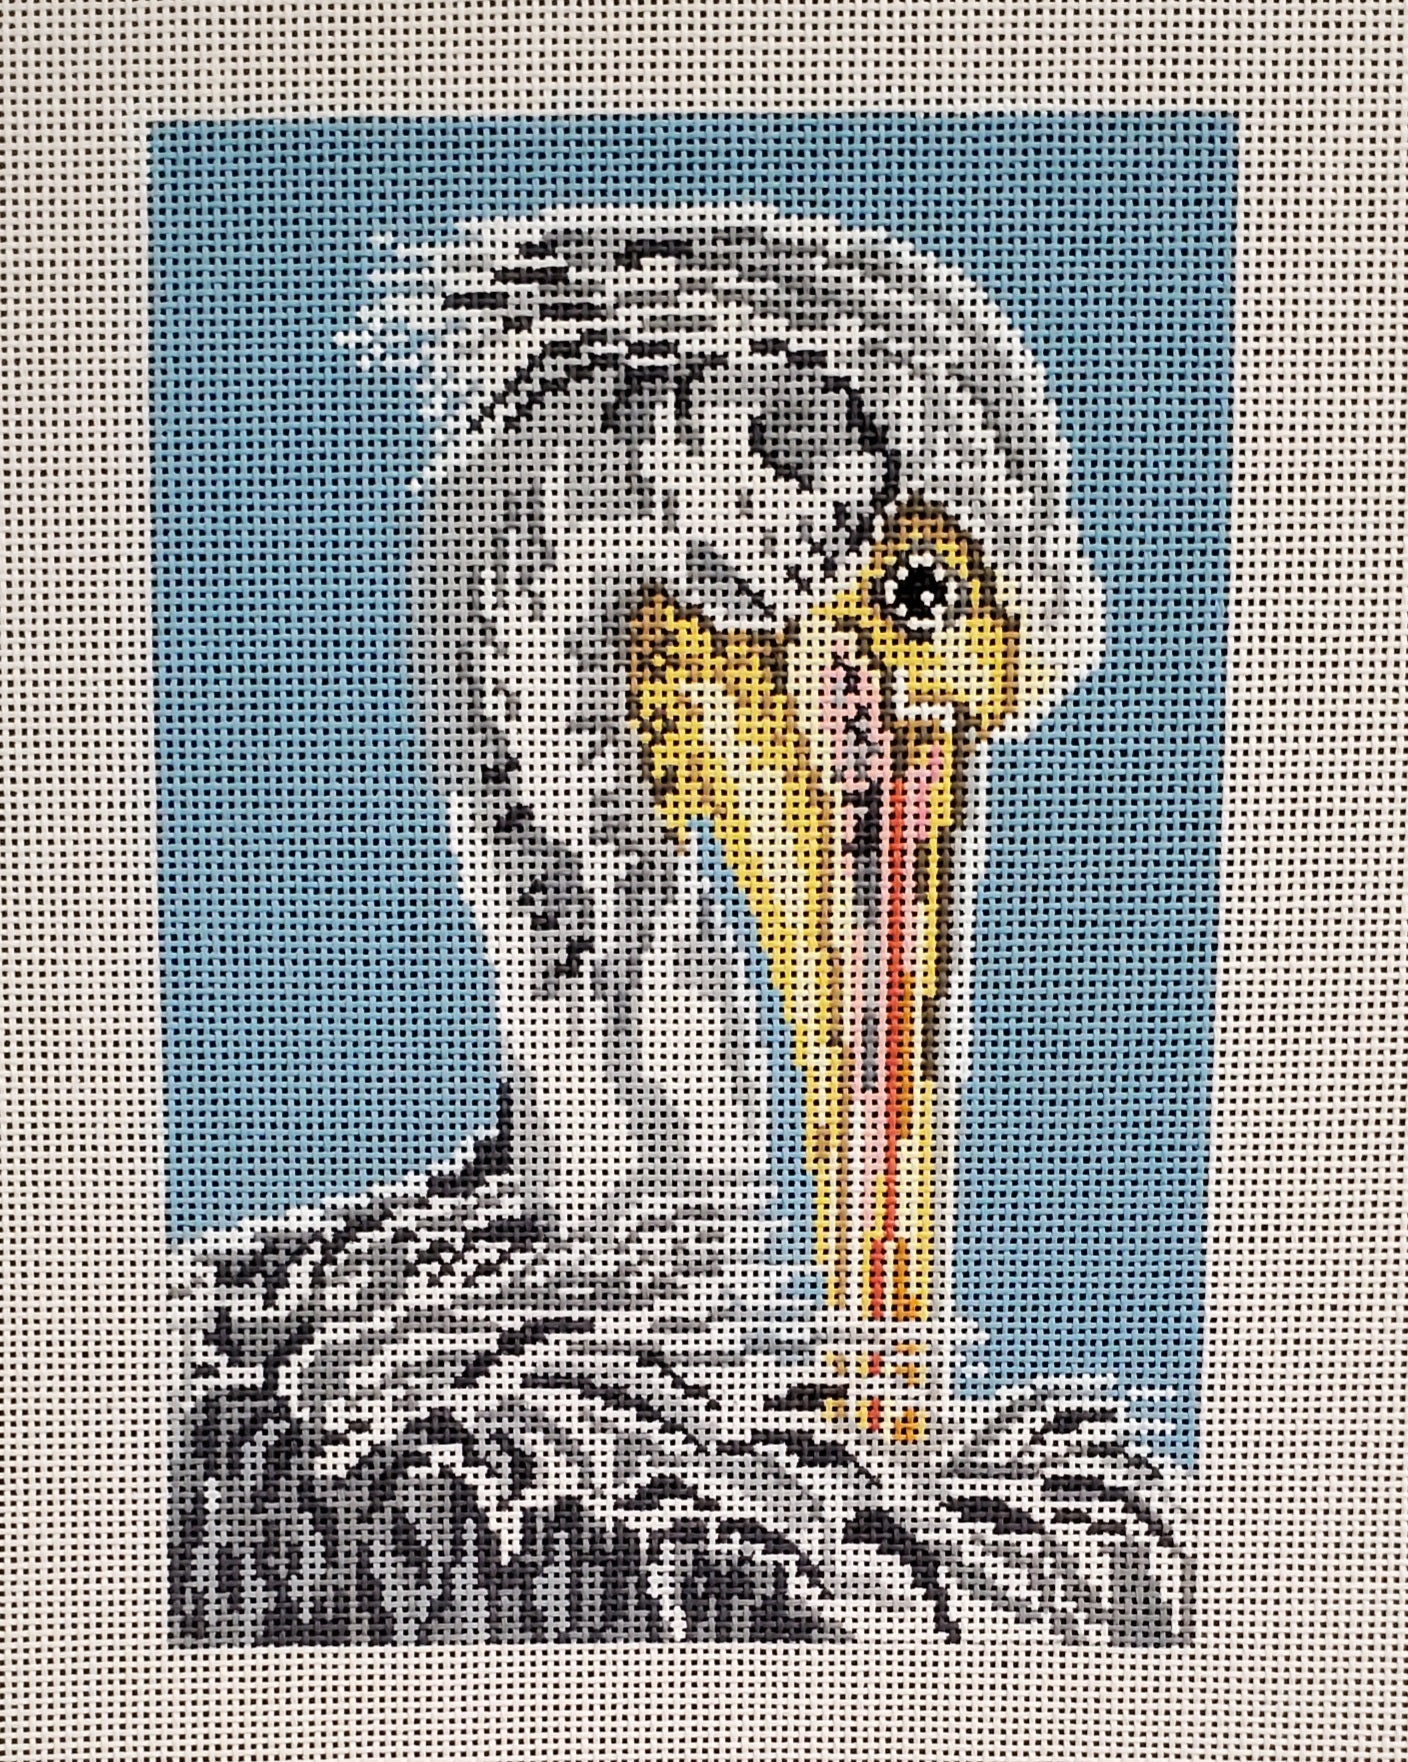 White Pelican - The Flying Needles